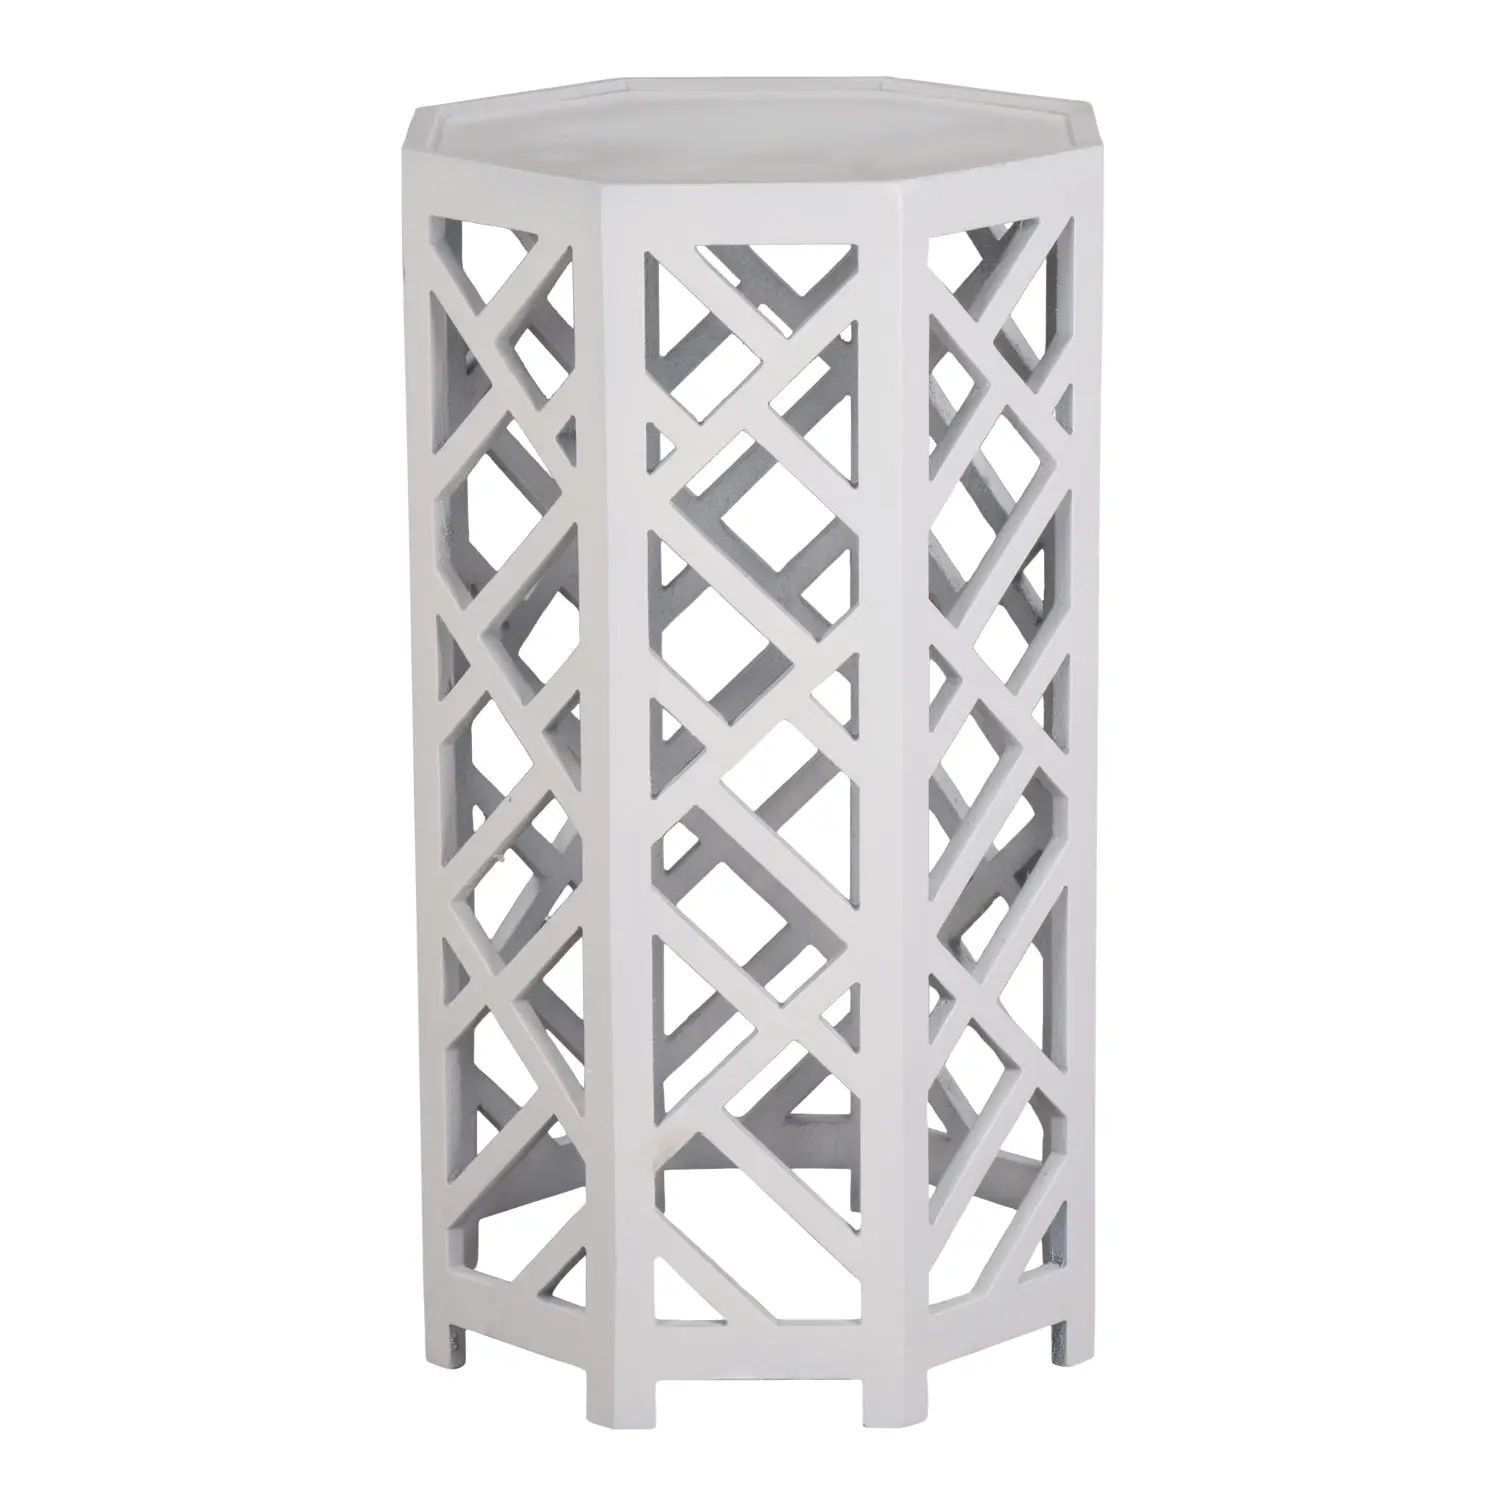 Wood Fretwork Pedestal, White - Large | Chairish